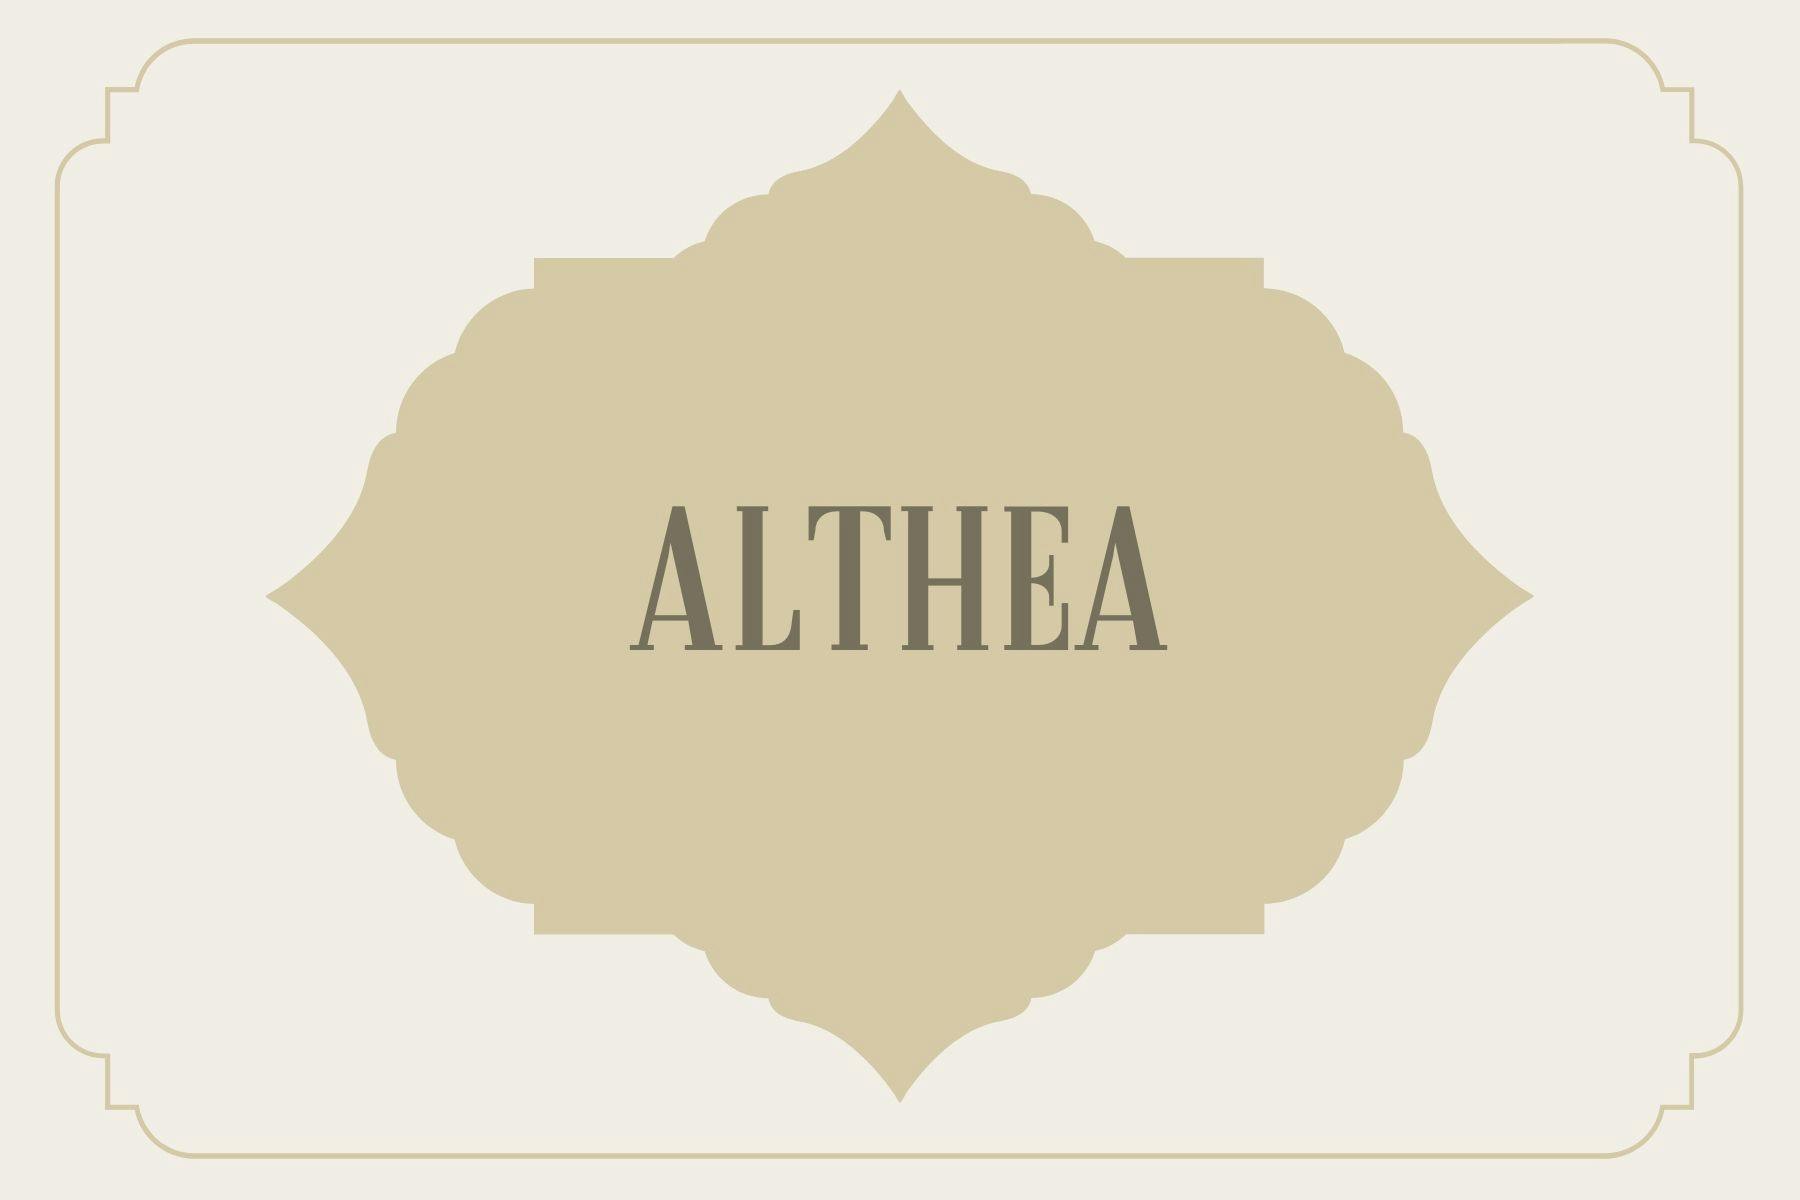 Althea Mythology Name Tattoo Designs - Tattoos with Names | Name tattoos,  Name tattoo, Name tattoo designs